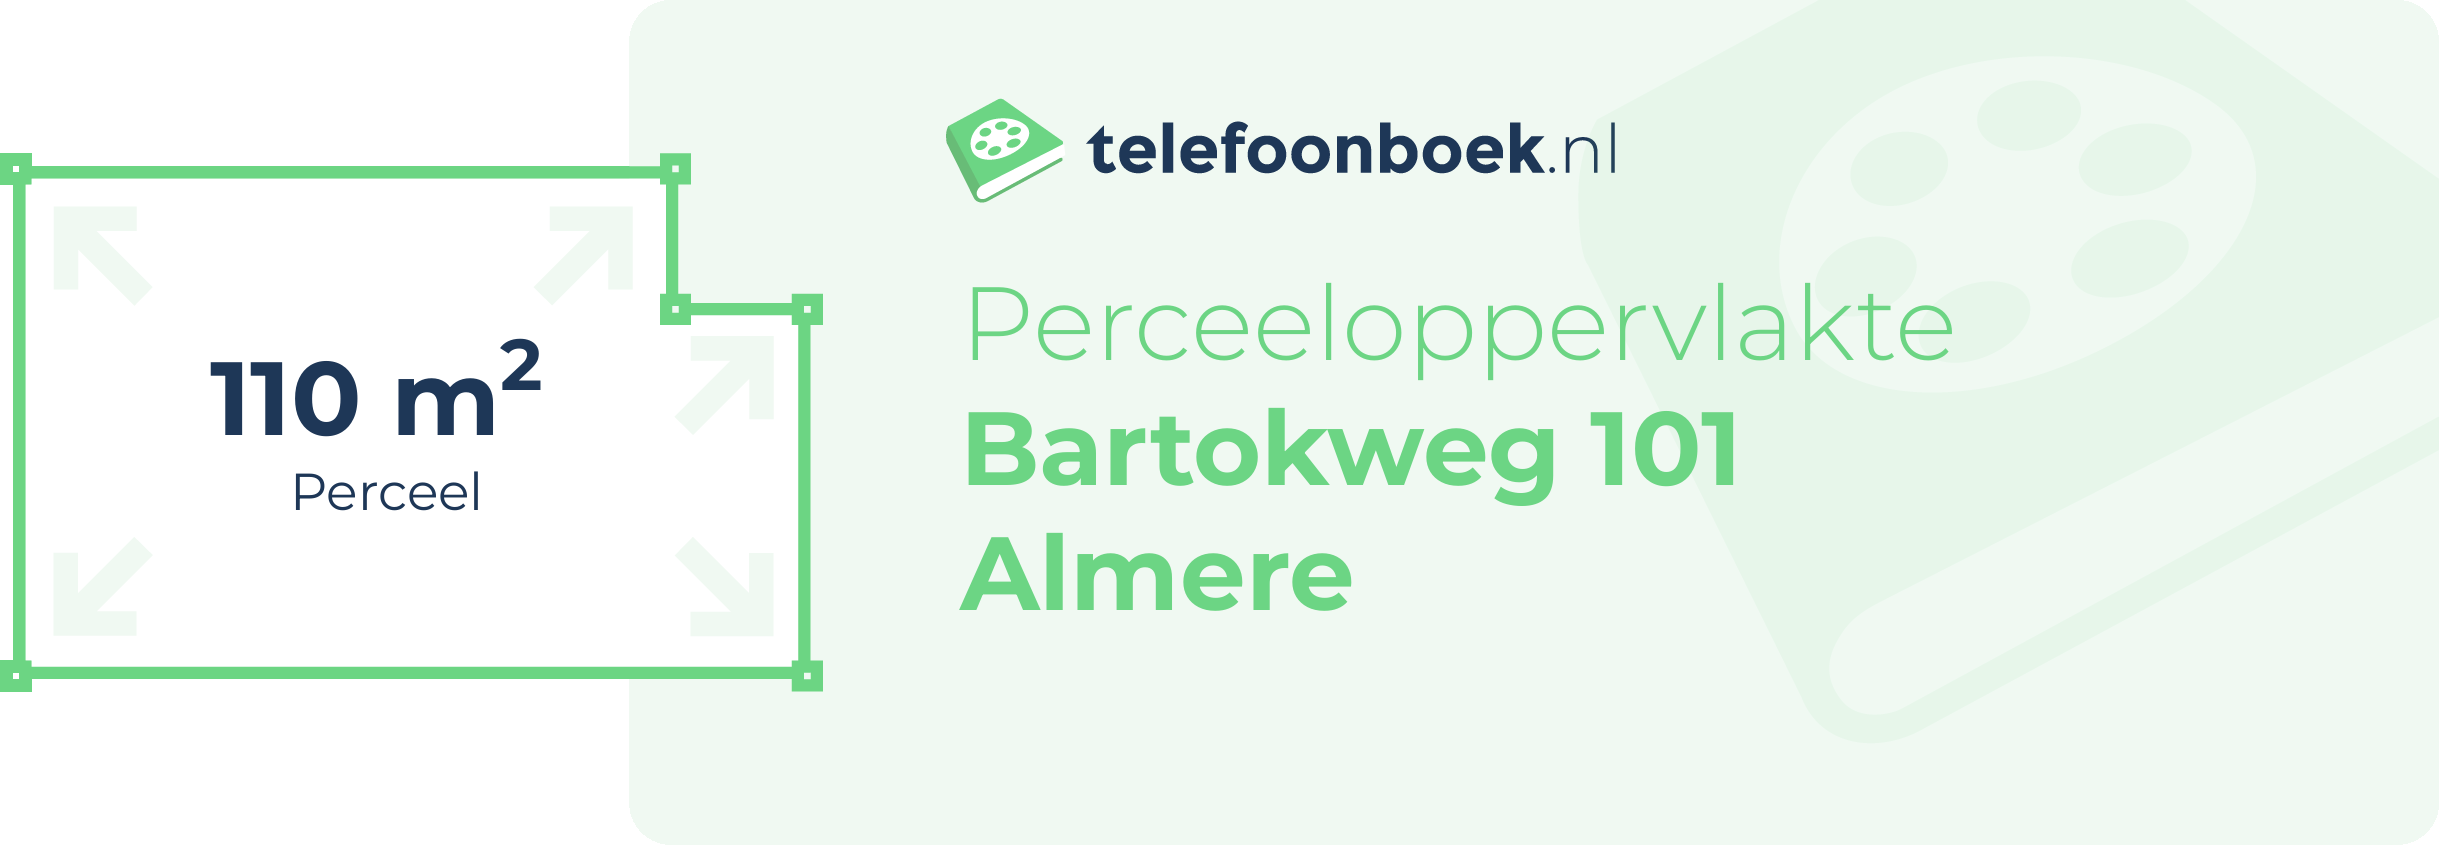 Perceeloppervlakte Bartokweg 101 Almere